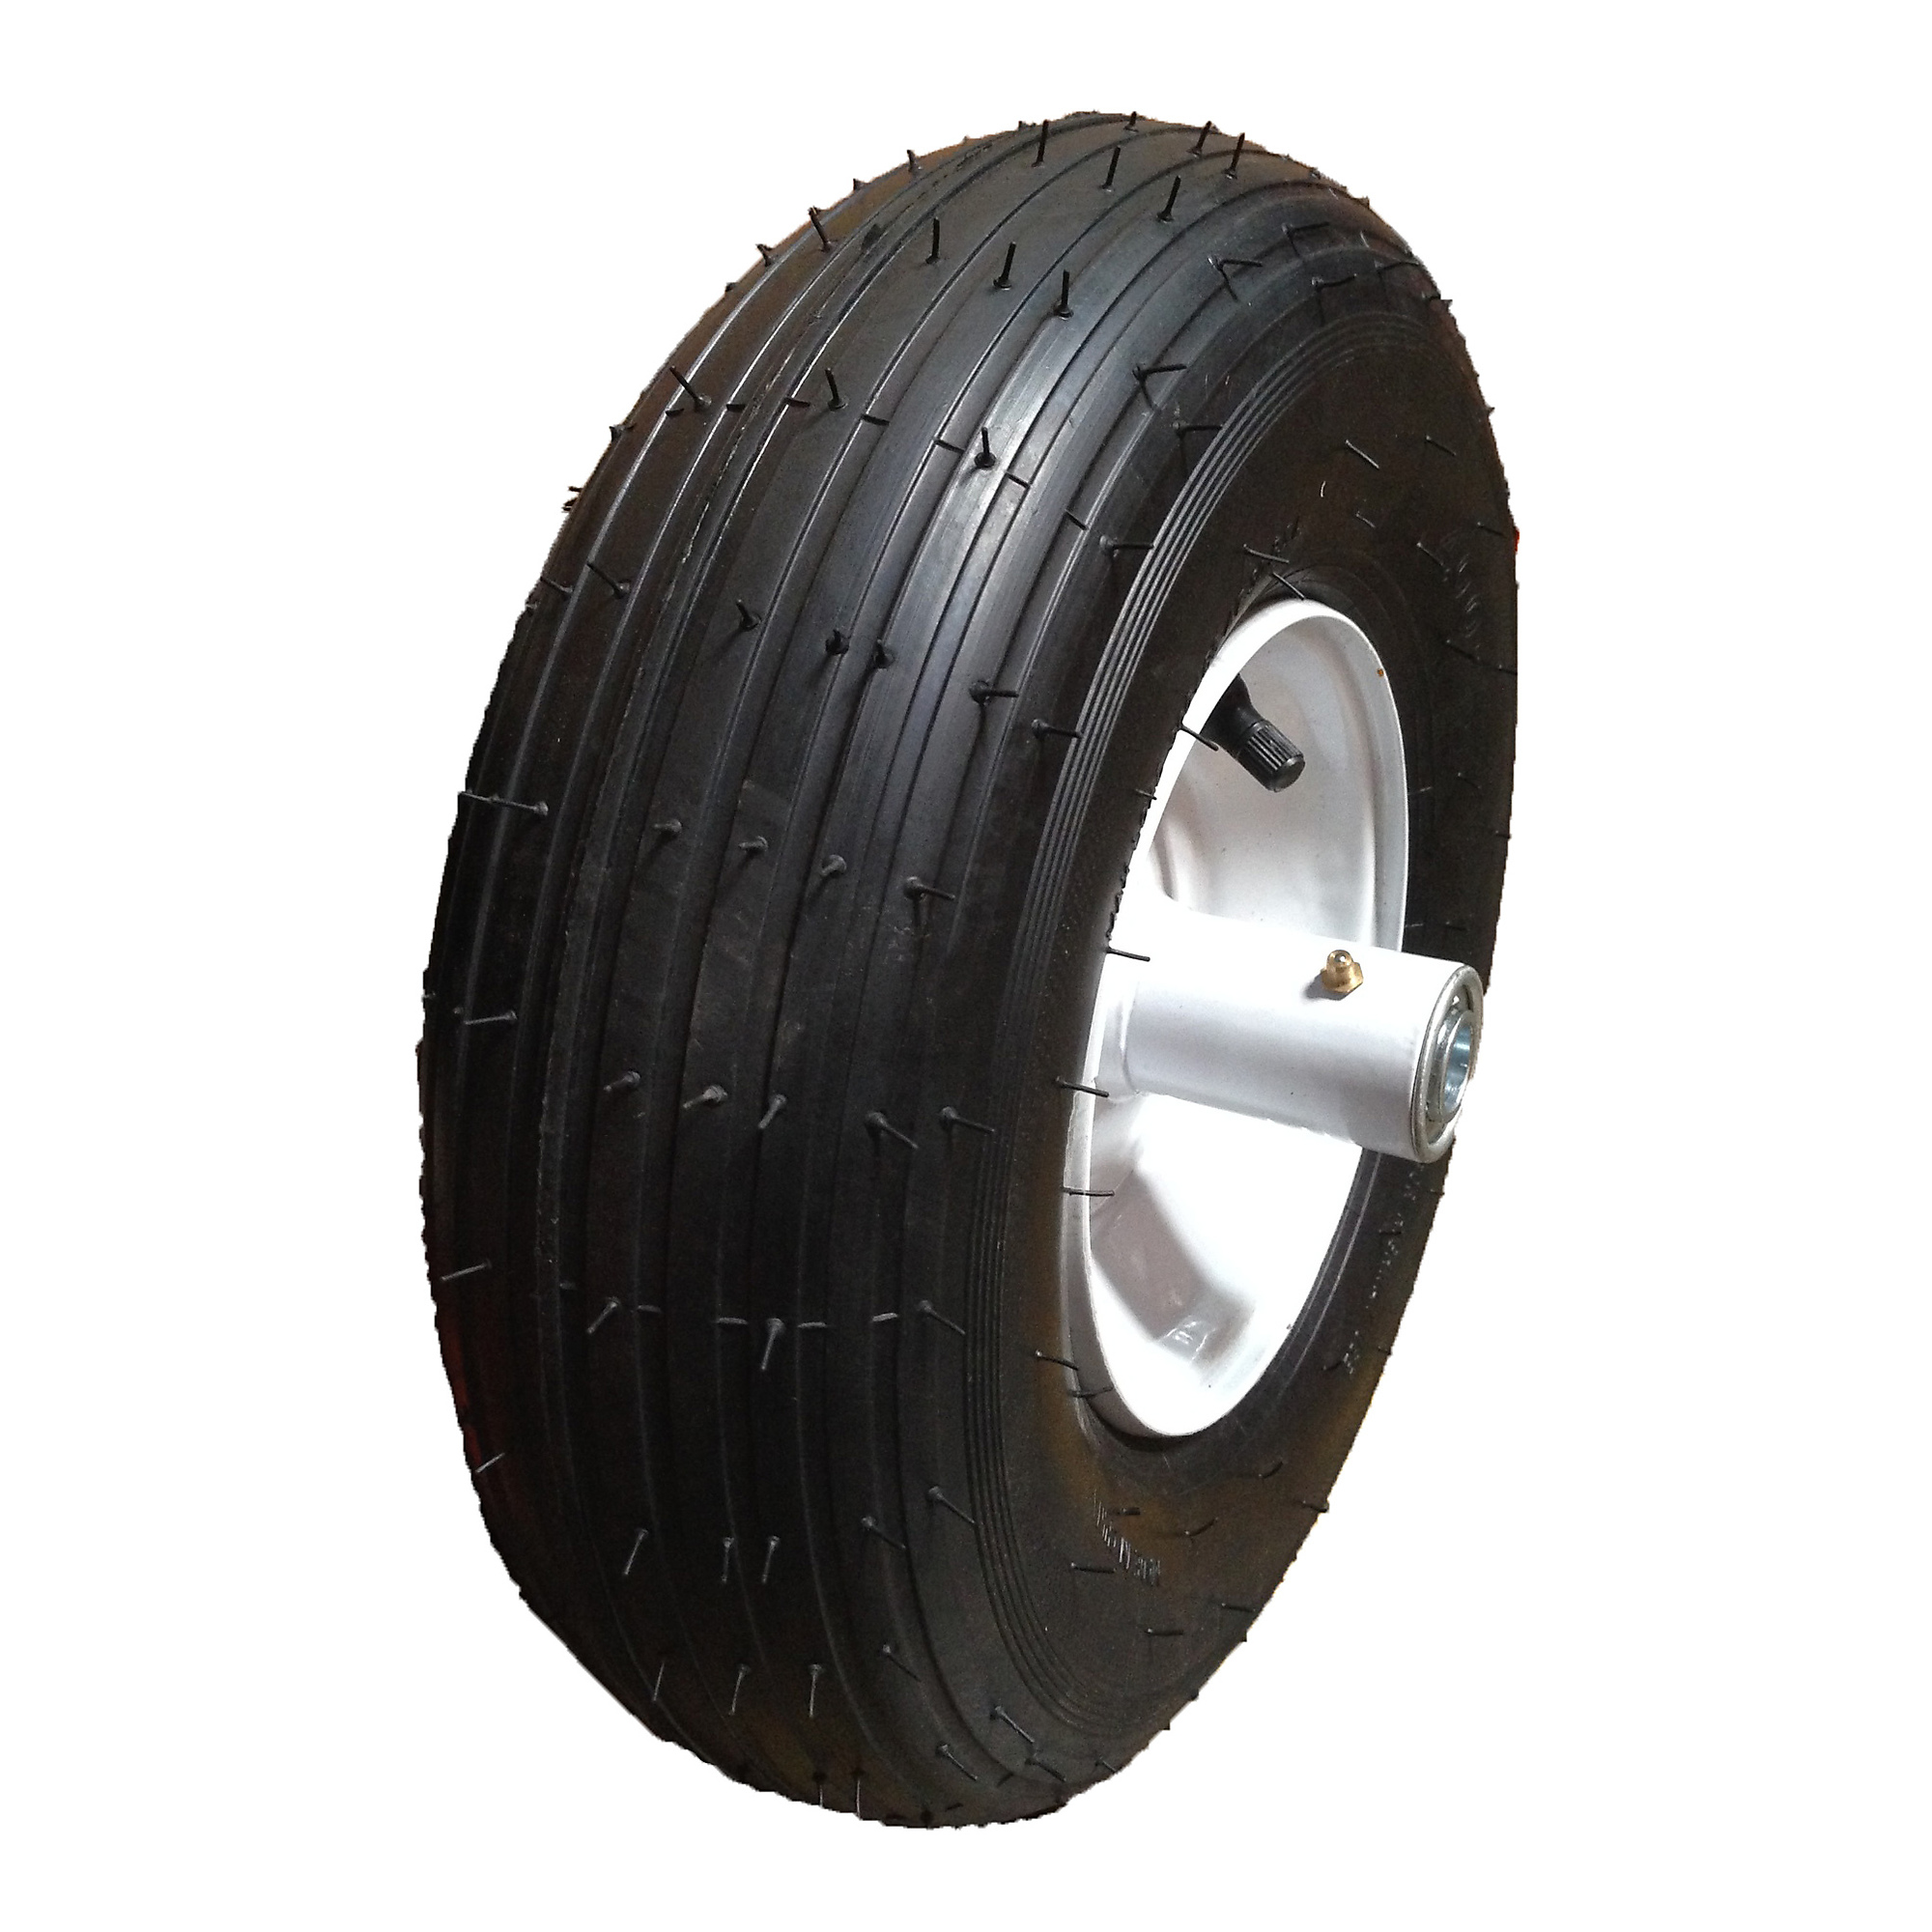 HI-RUN, Wheelbarrow Tire Assembly, Rib, 5/8Inch bearings, Tire Size 4.00-6 Load Range Rating B, Model CT1005